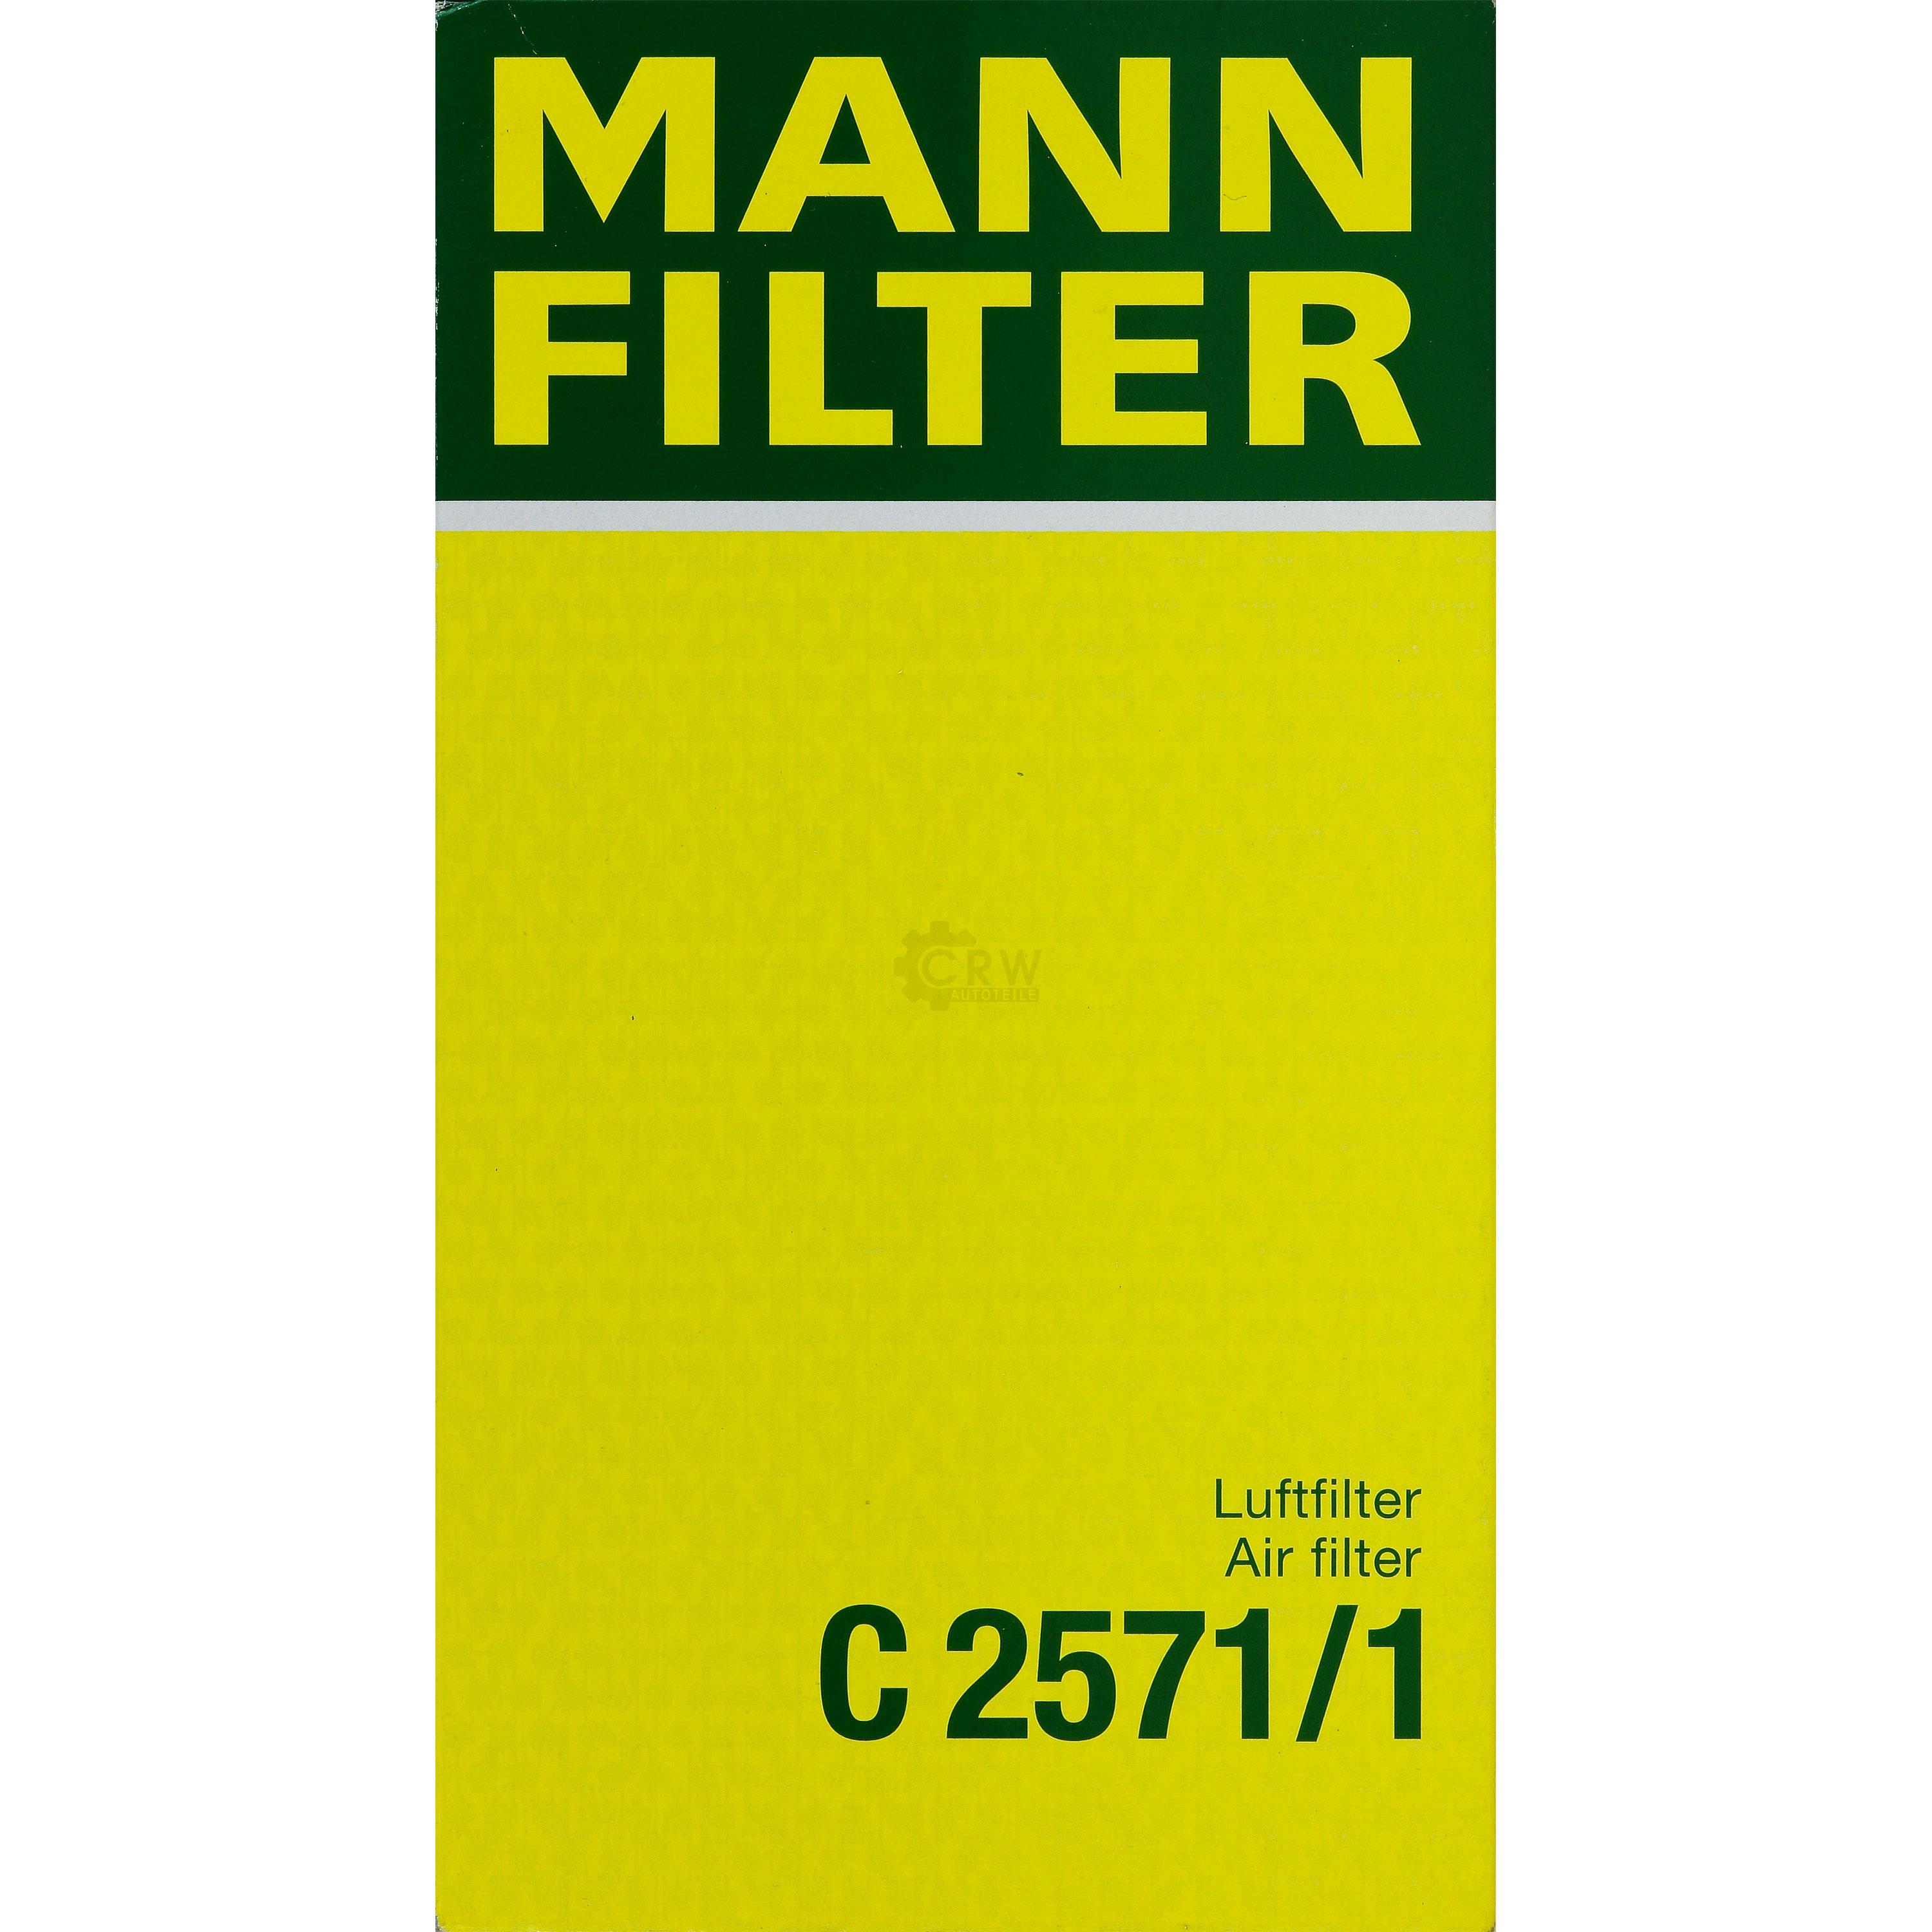 MANN-FILTER Luftfilter für Fiat Tipo 160 2.0 i.e Tempra 159 1.6 159_ Lancia